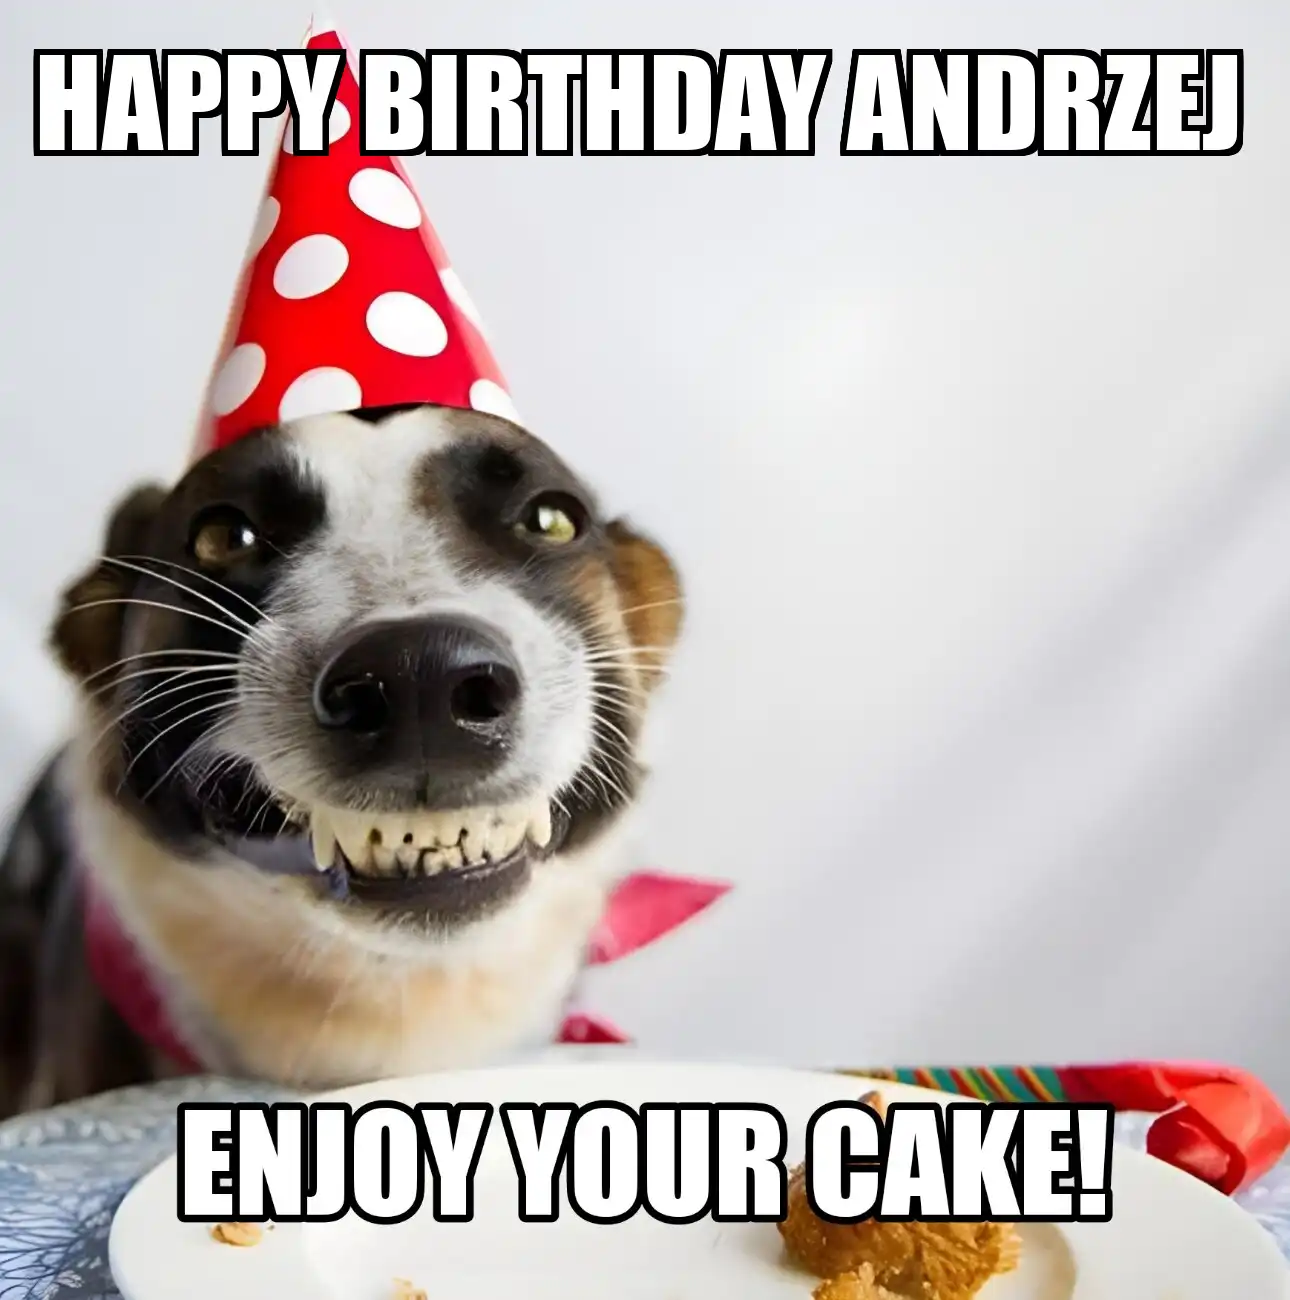 Happy Birthday Andrzej Enjoy Your Cake Dog Meme